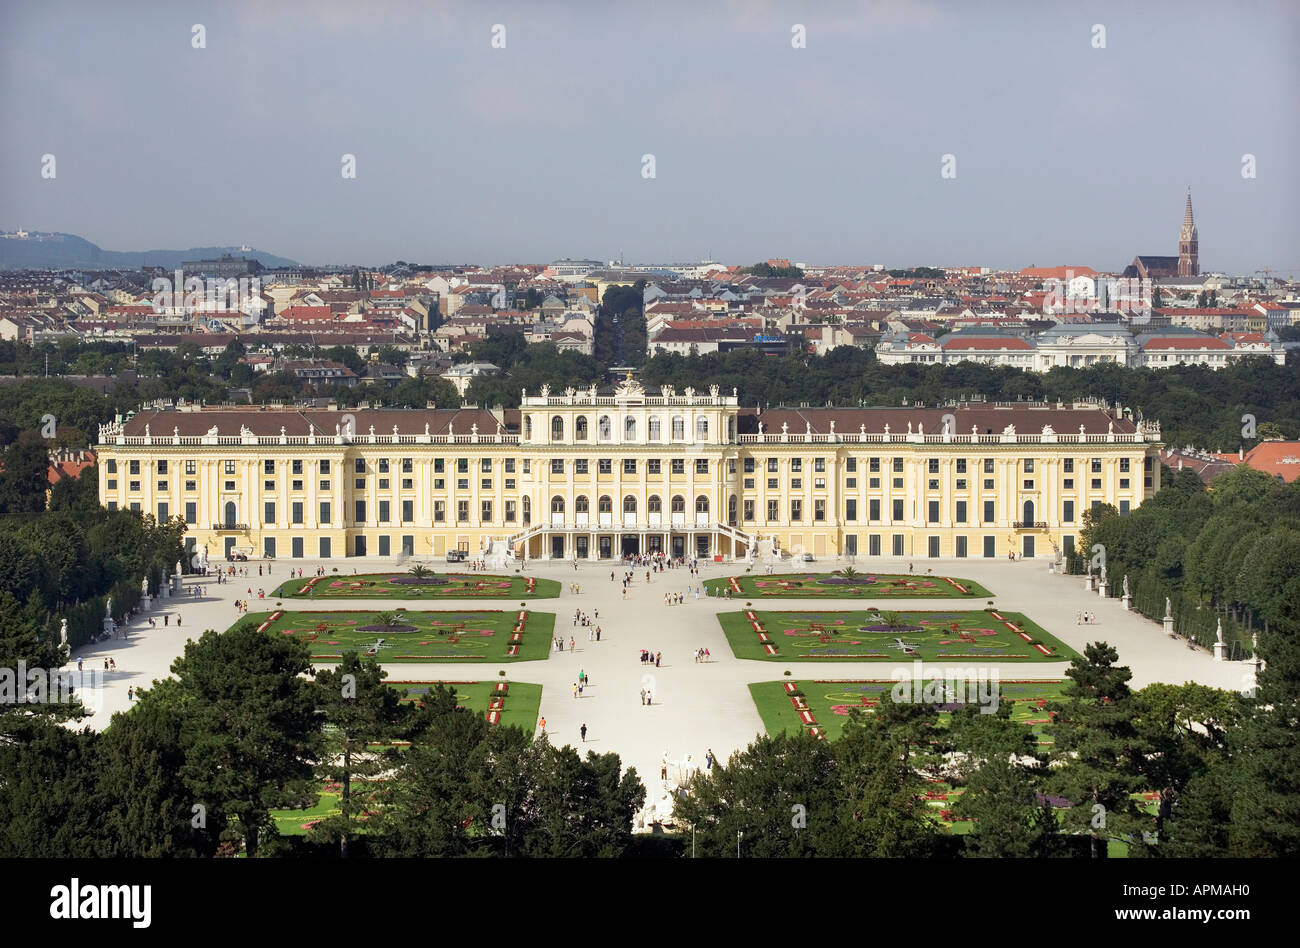 Austria, Vienna, exterior of Schoenbrunn Castle, elevated view Stock Photo